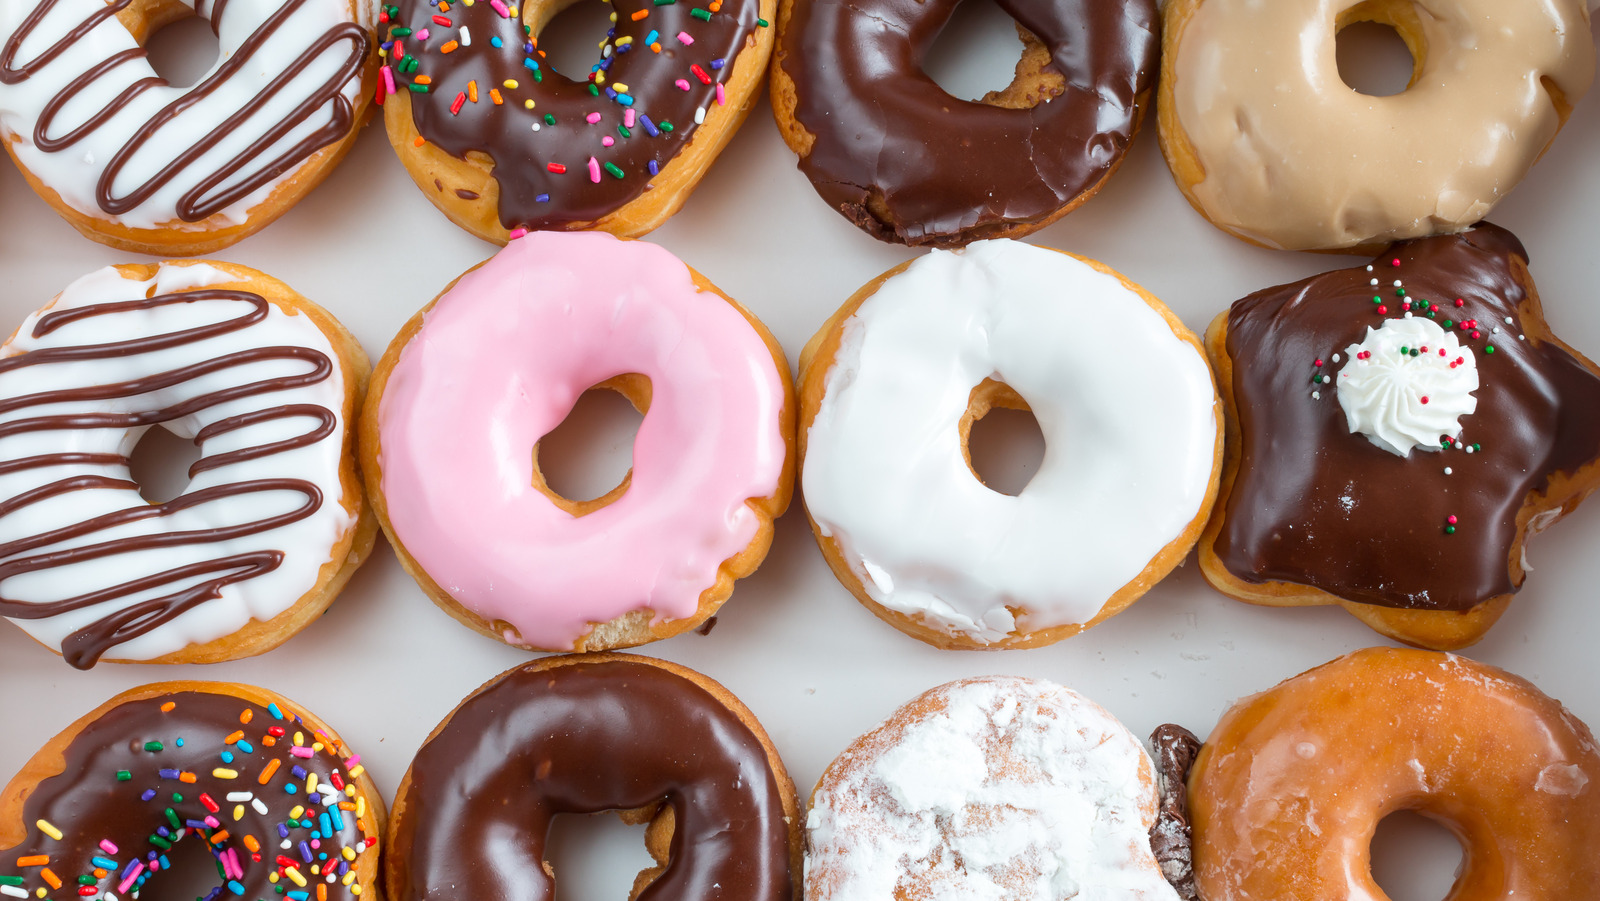 Dunkin's Spring Menu Includes A Surprising Donut Flavor